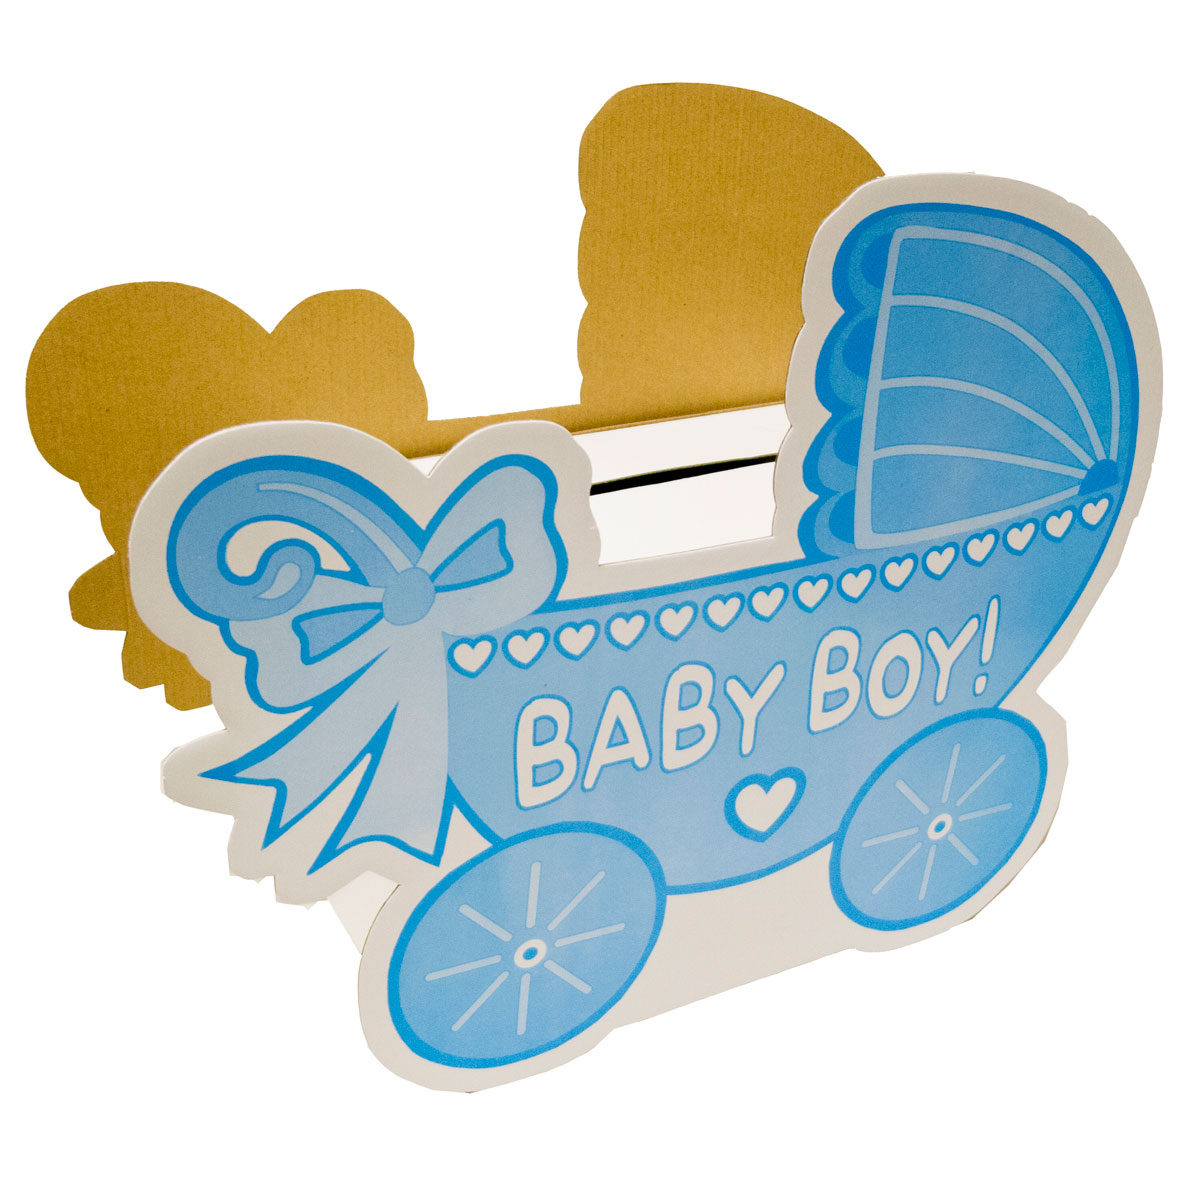 ifavor123.com: Baby Shower Baby Boy Wishing Well Carriage Box $24.99